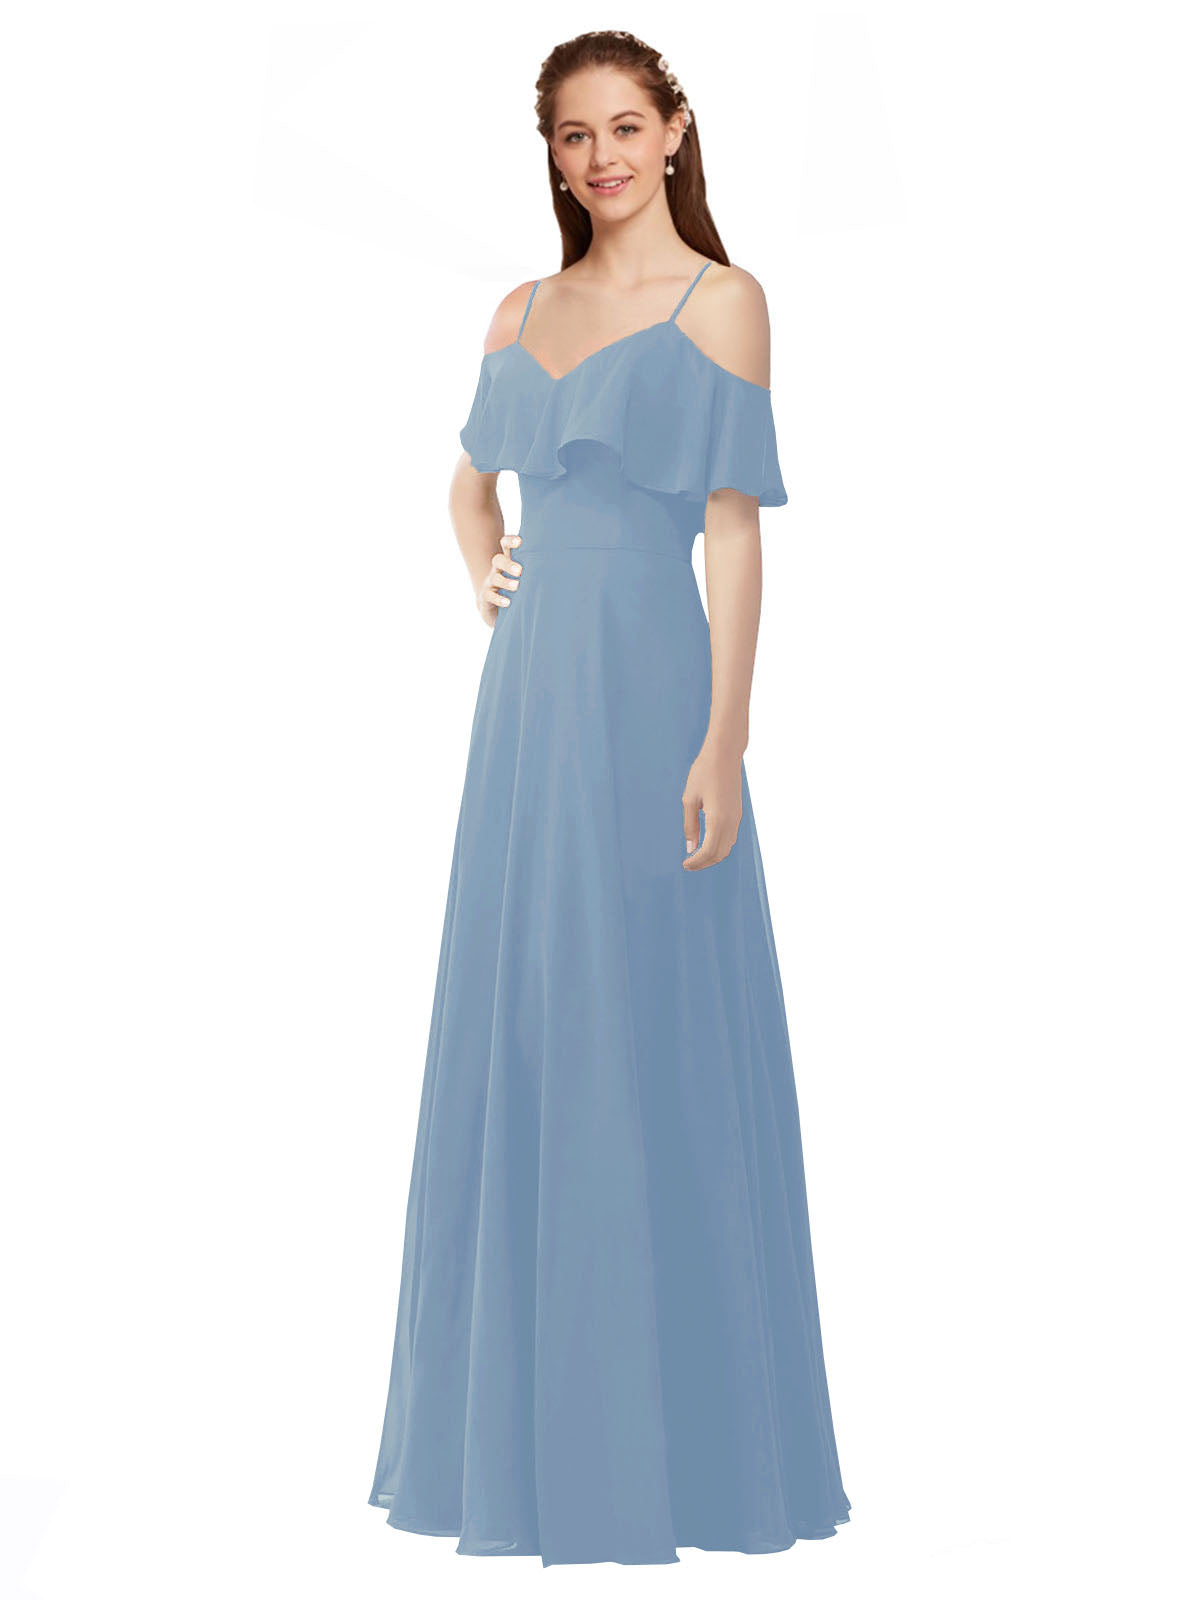 Dusty Blue A-Line Off the Shoulder V-Neck Sleeveless Long Bridesmaid Dress Marianna